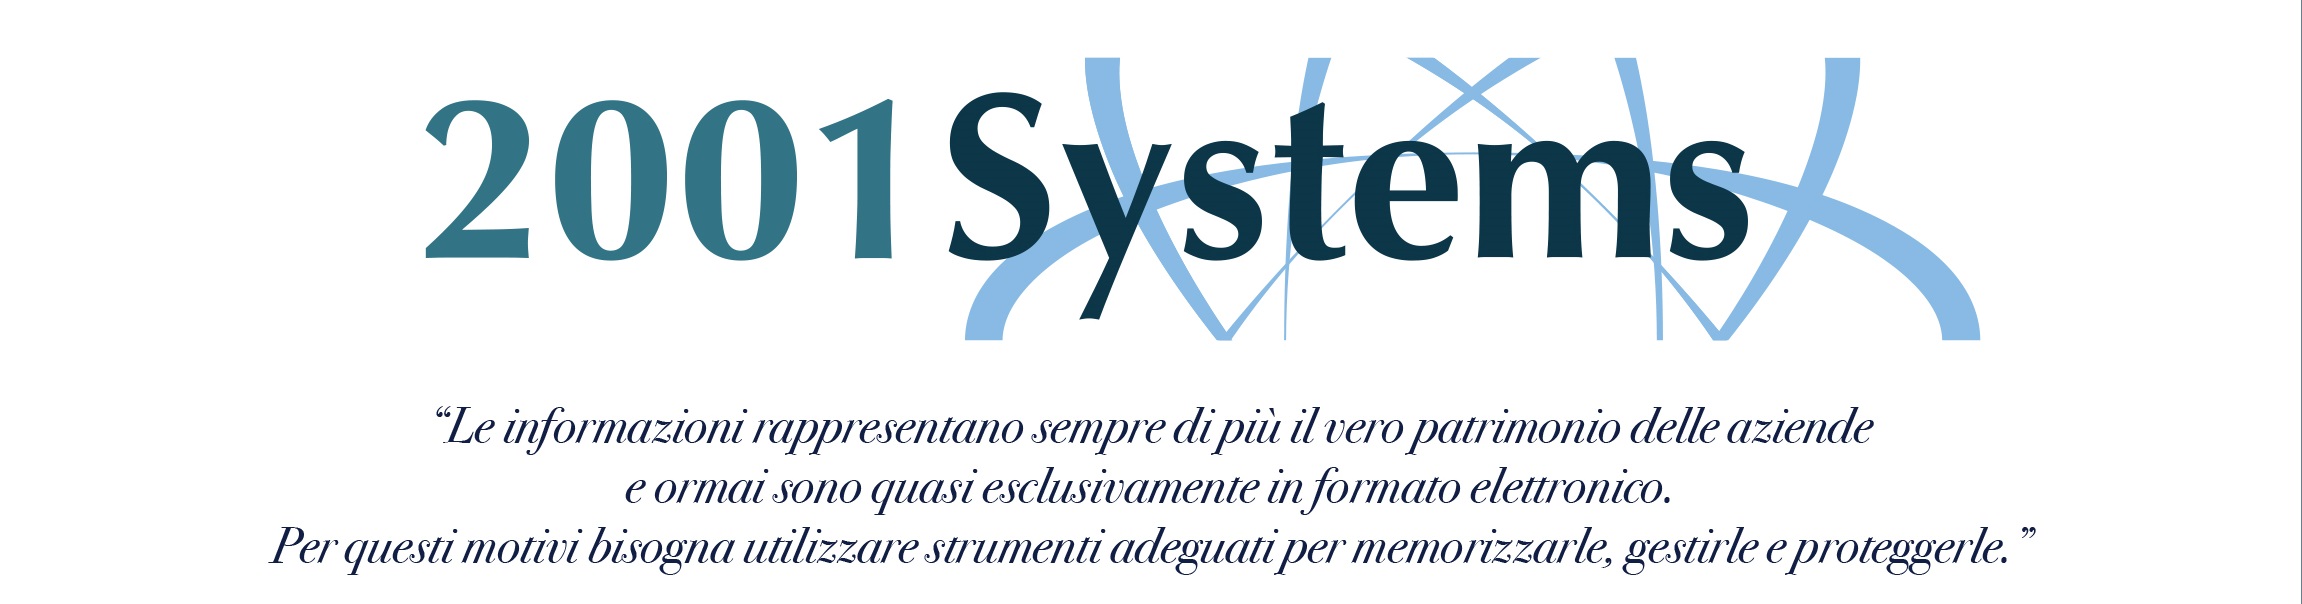 2001systems - sicurezza informatica, assistenza sistemistica, cyber security, GDPR, privacy